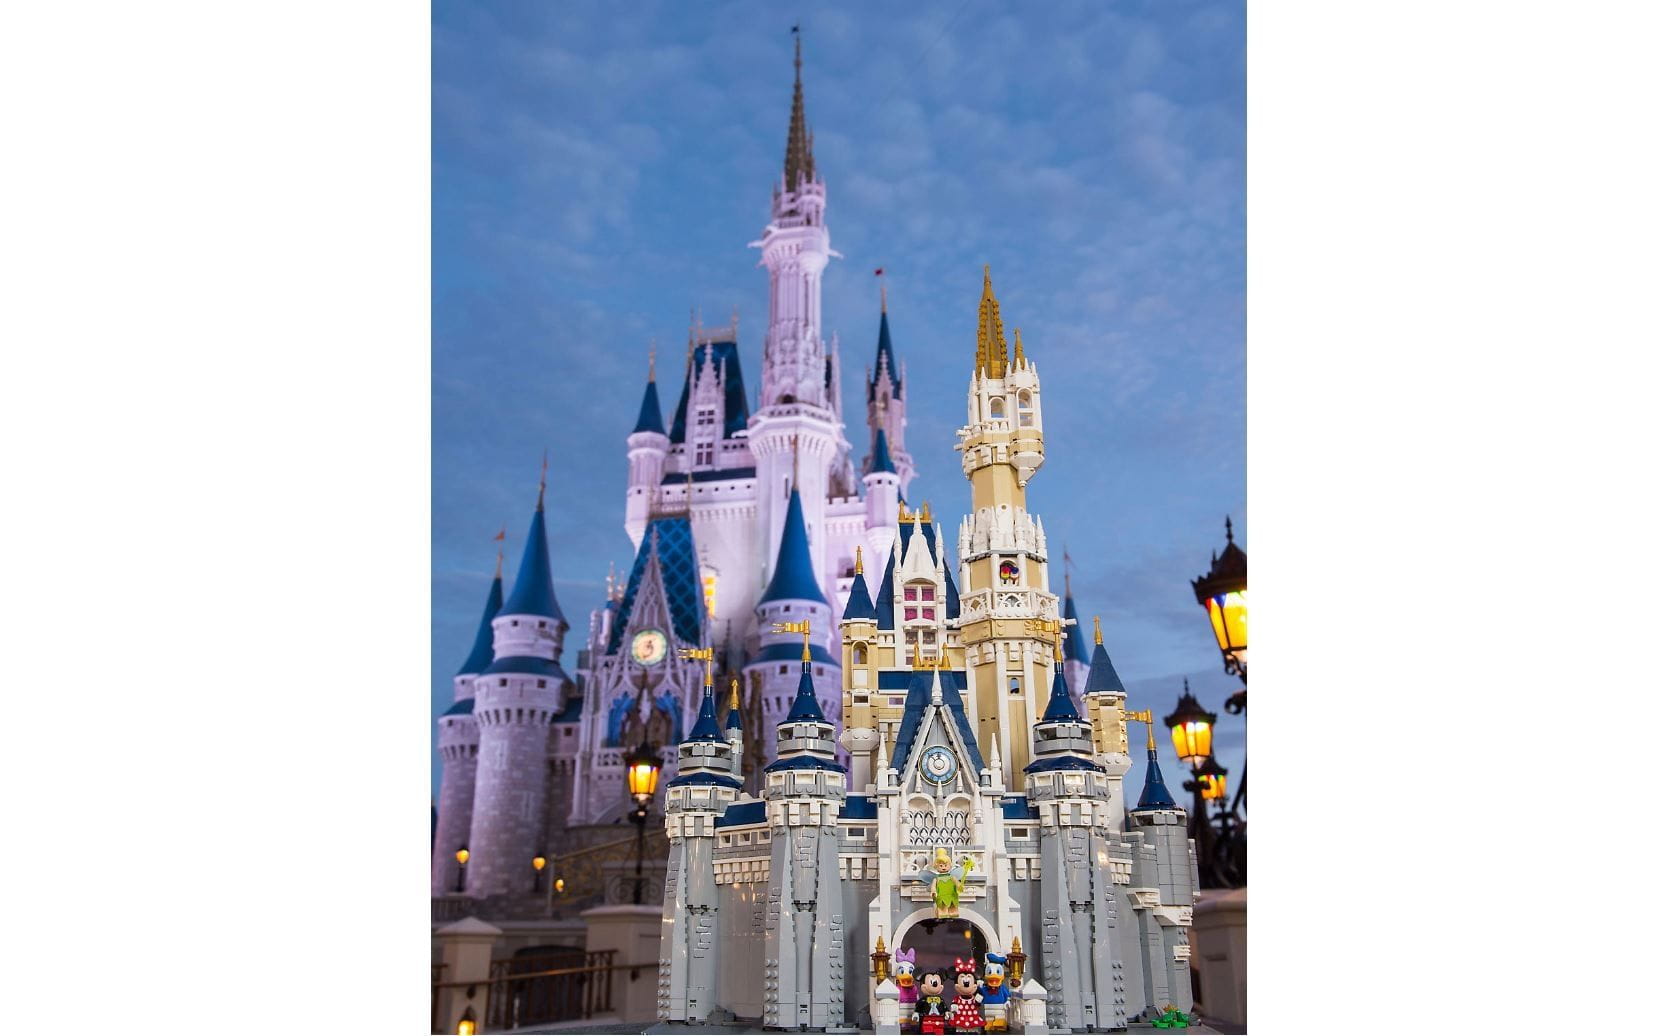 LEGO Exklusiv Set Das Disney Schloss